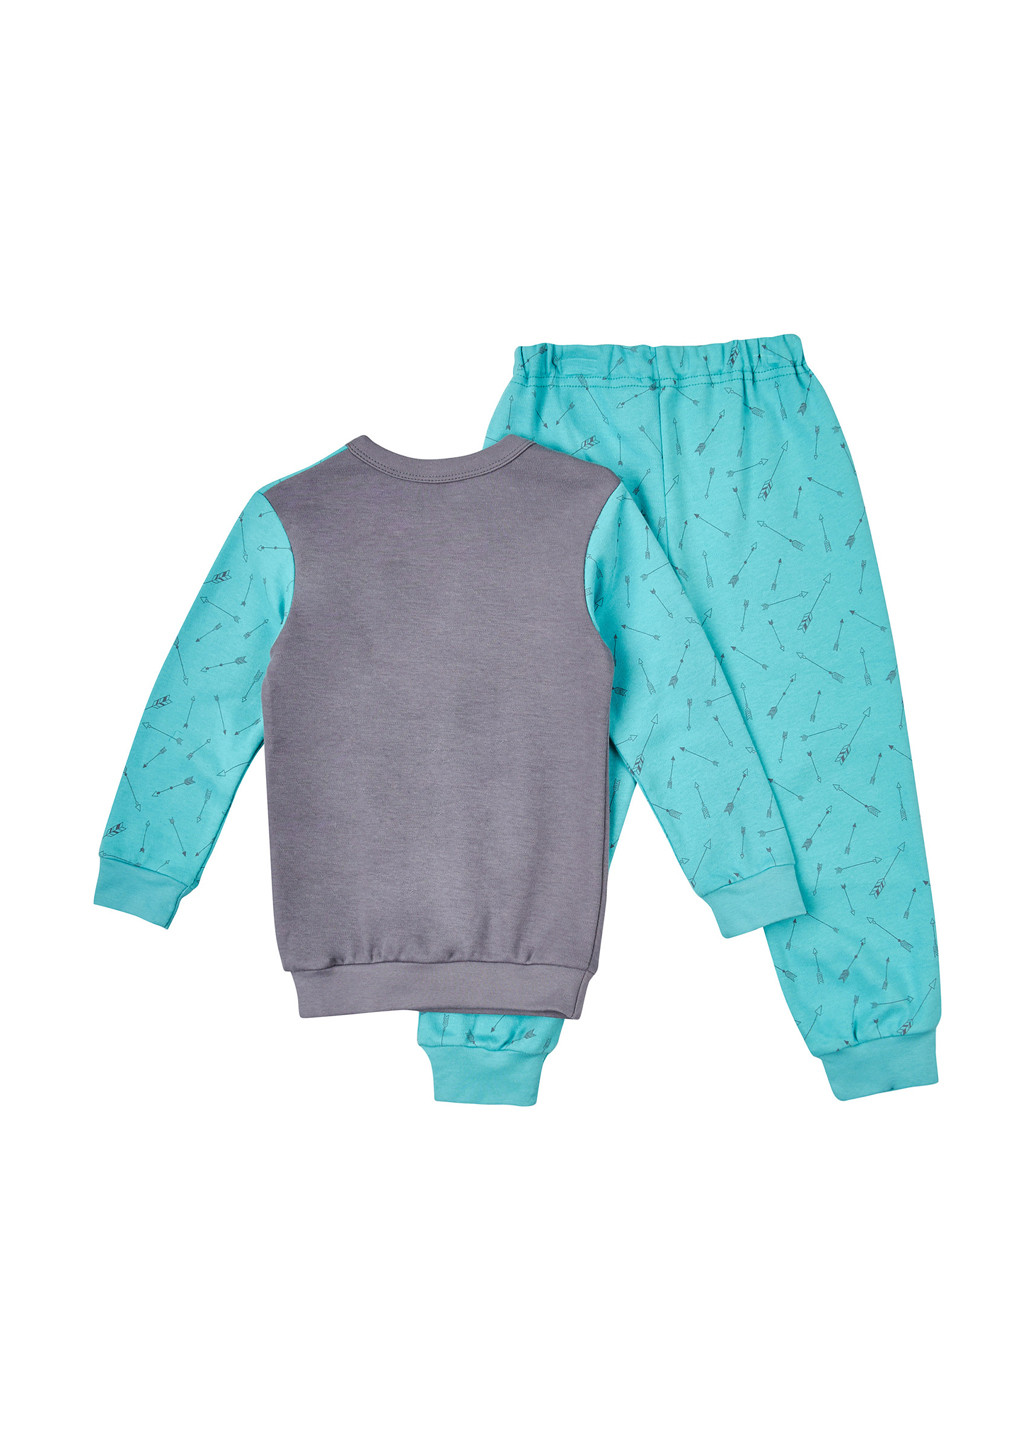 Бирюзовая всесезон пижама (свитшот, брюки) свитшот + шорты Z16